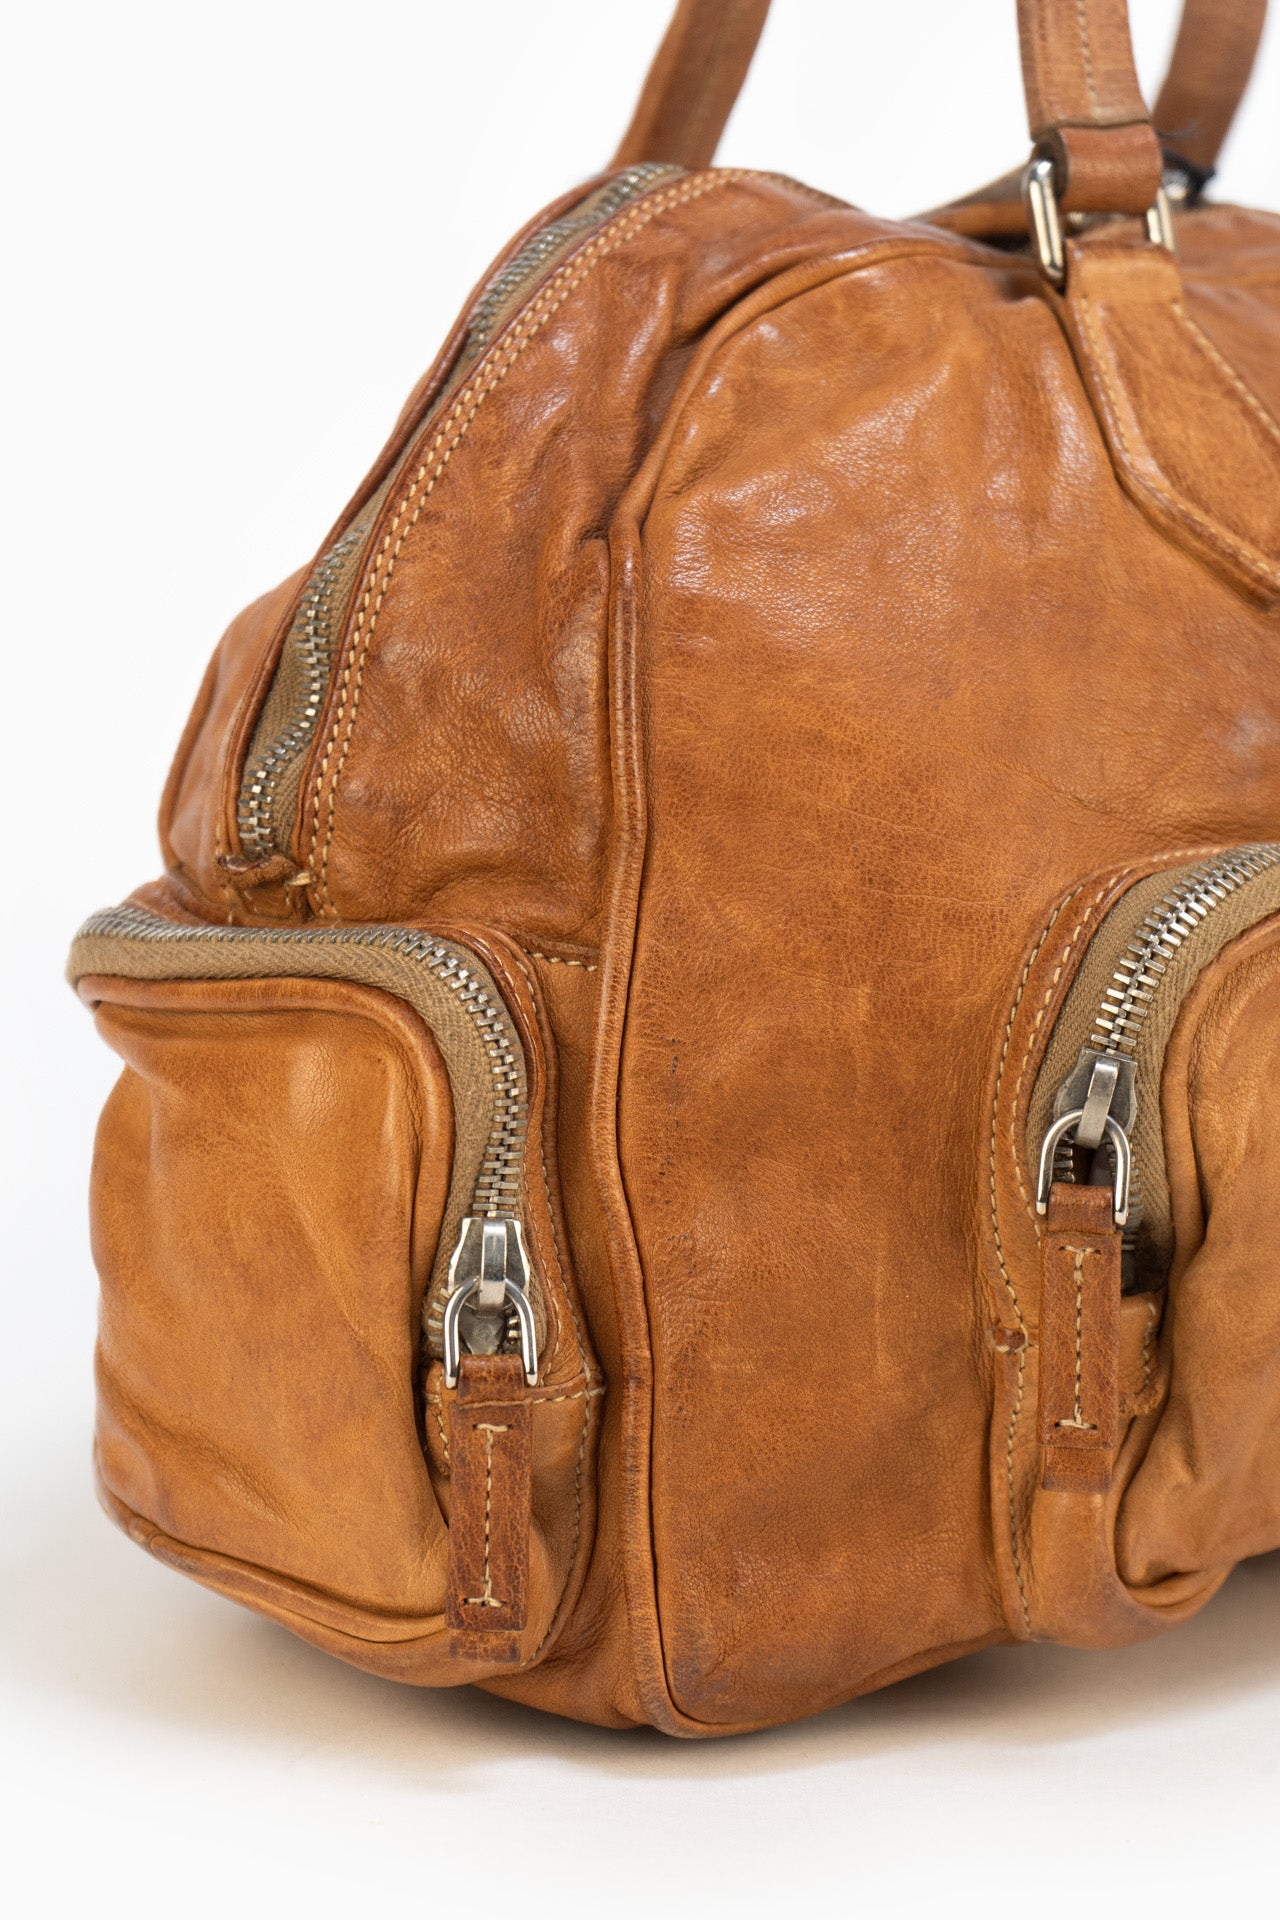 Prada Leather Hand Bag In Camel